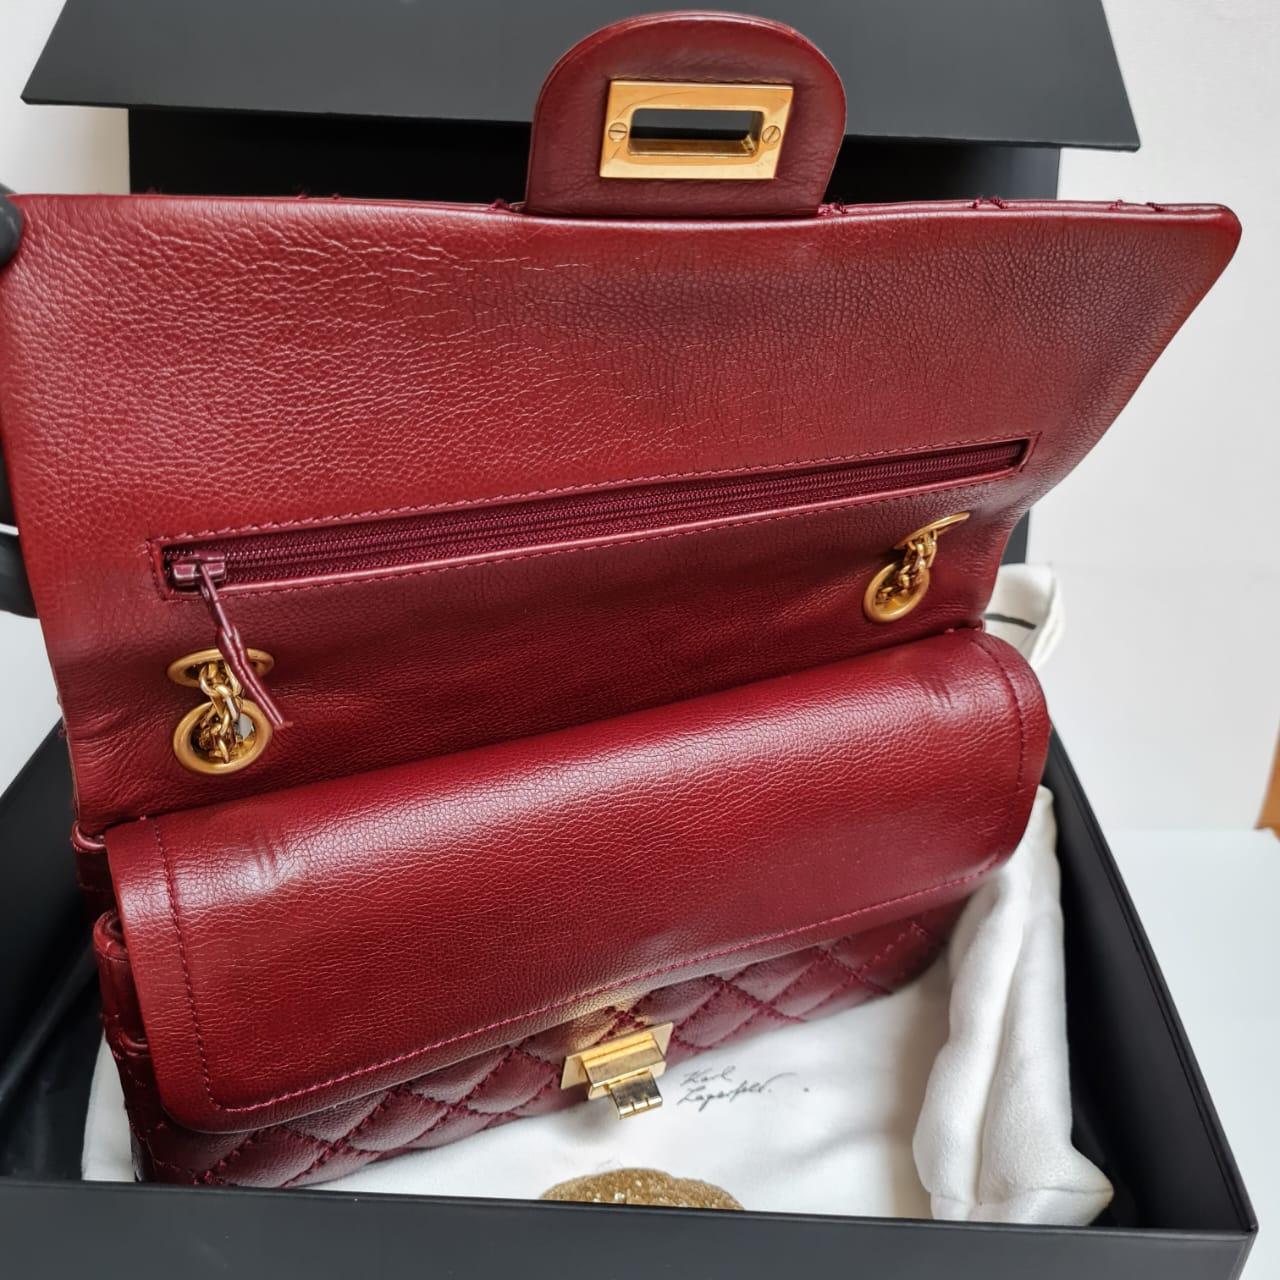 Chanel Maroon Leather Reissue 2.55 Crossbody Bag 225 6